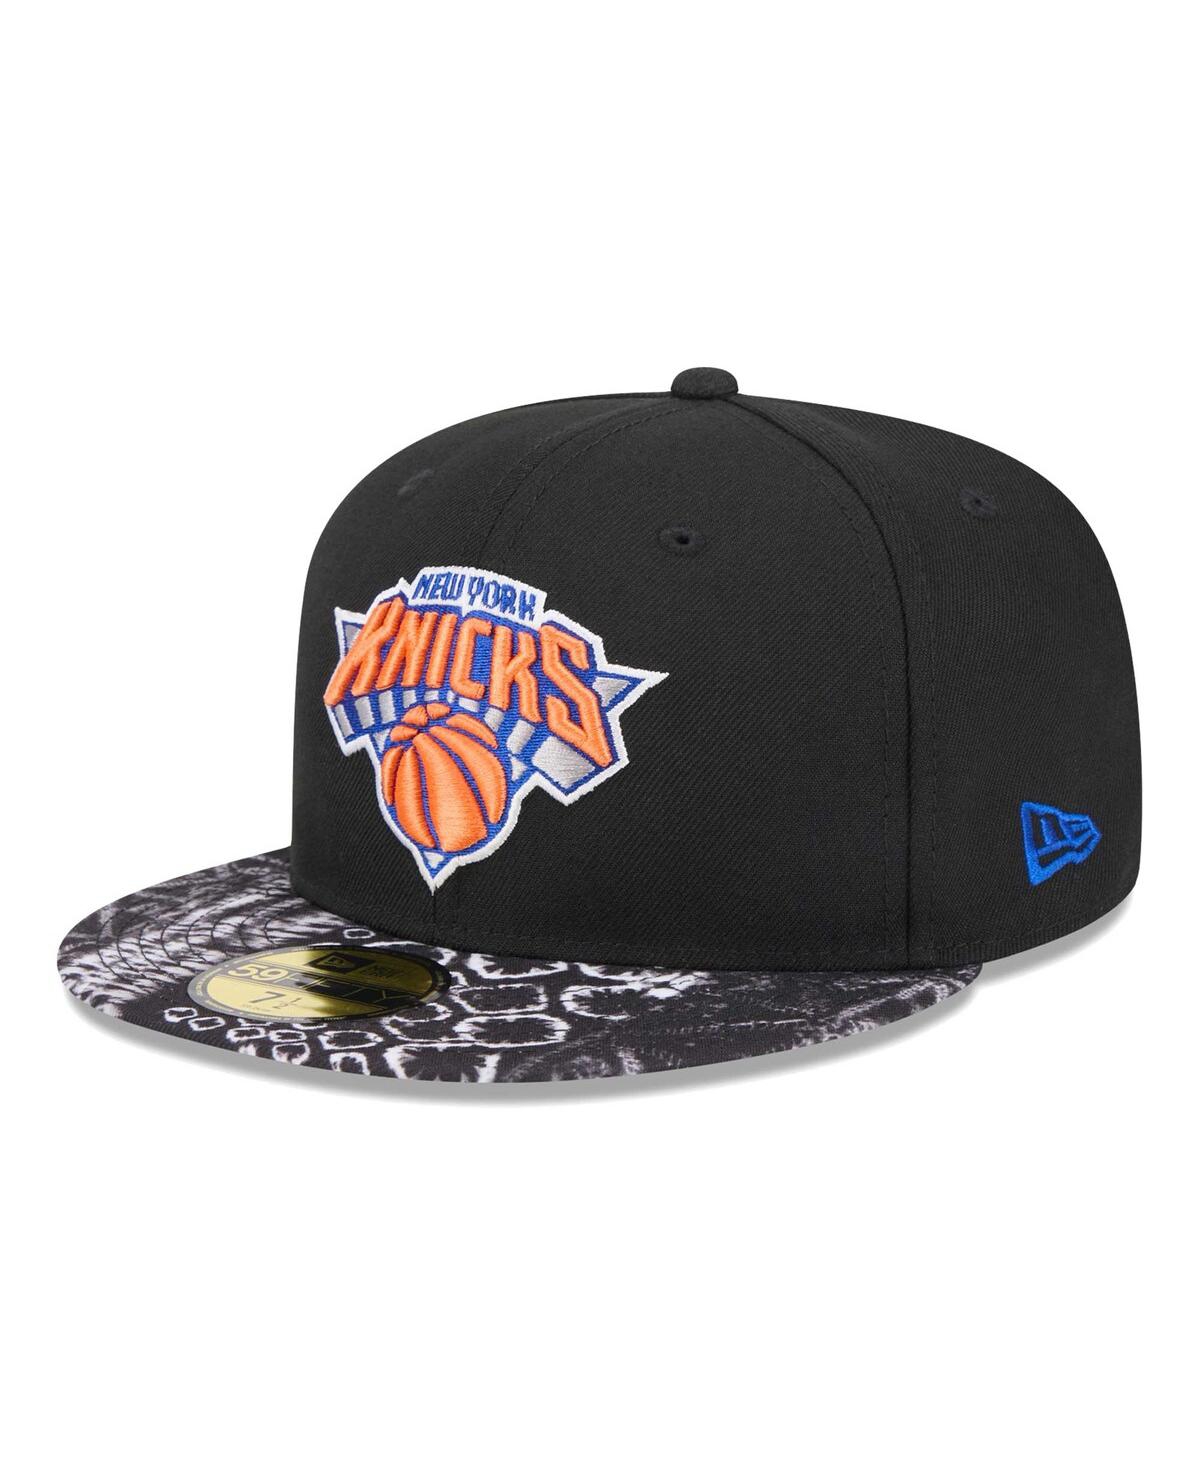 Men's Black New York Knicks Coral Reef Visor 59FIFTY Fitted Hat - Black